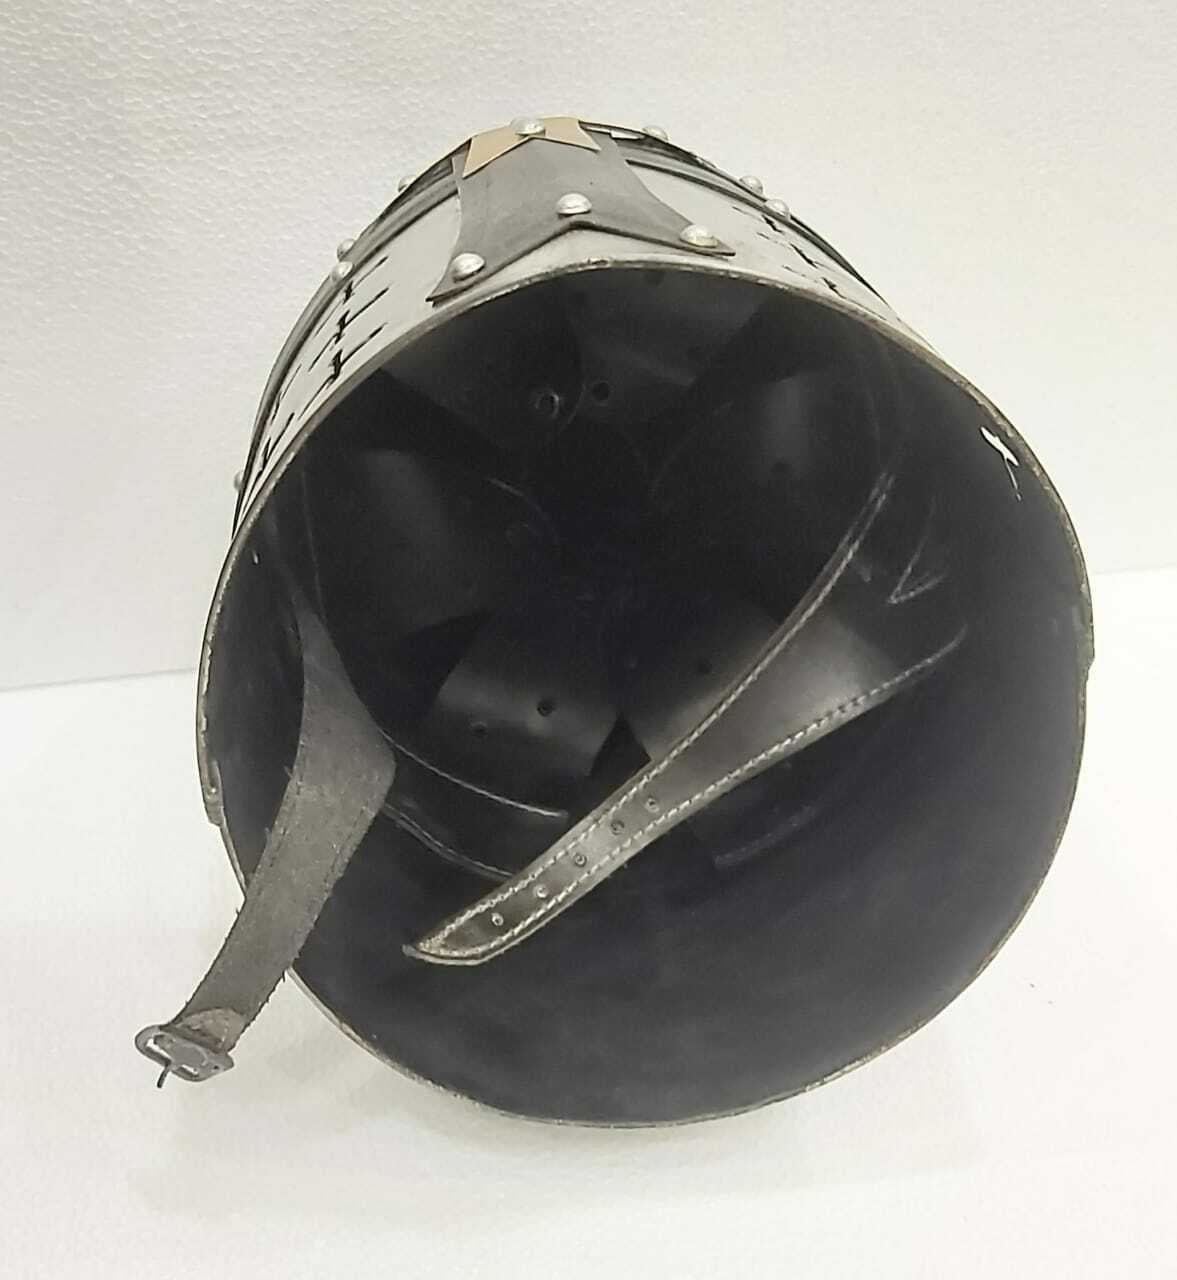 Medieval Barbuta Helmet Role Play Knight Helmet Fully Functional Inner Leather